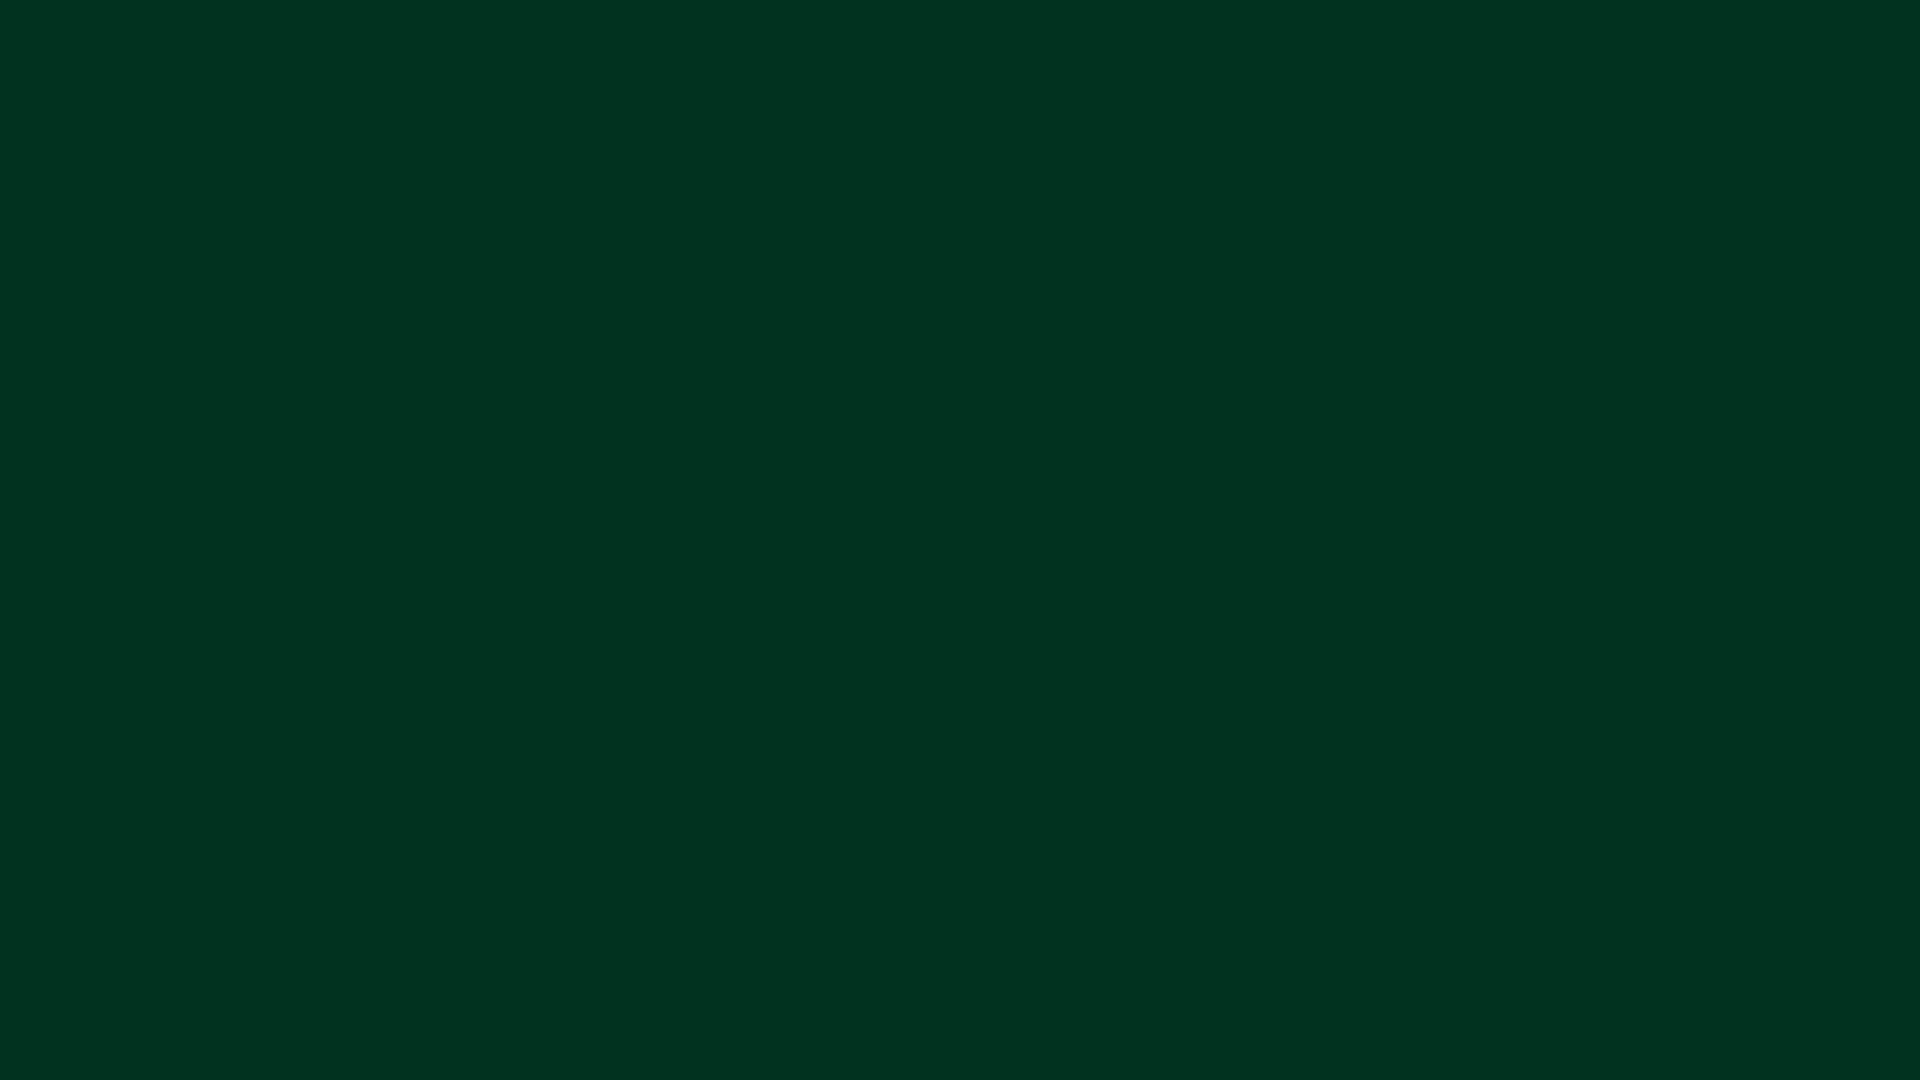 77+] Dark Green Backgrounds - WallpaperSafari